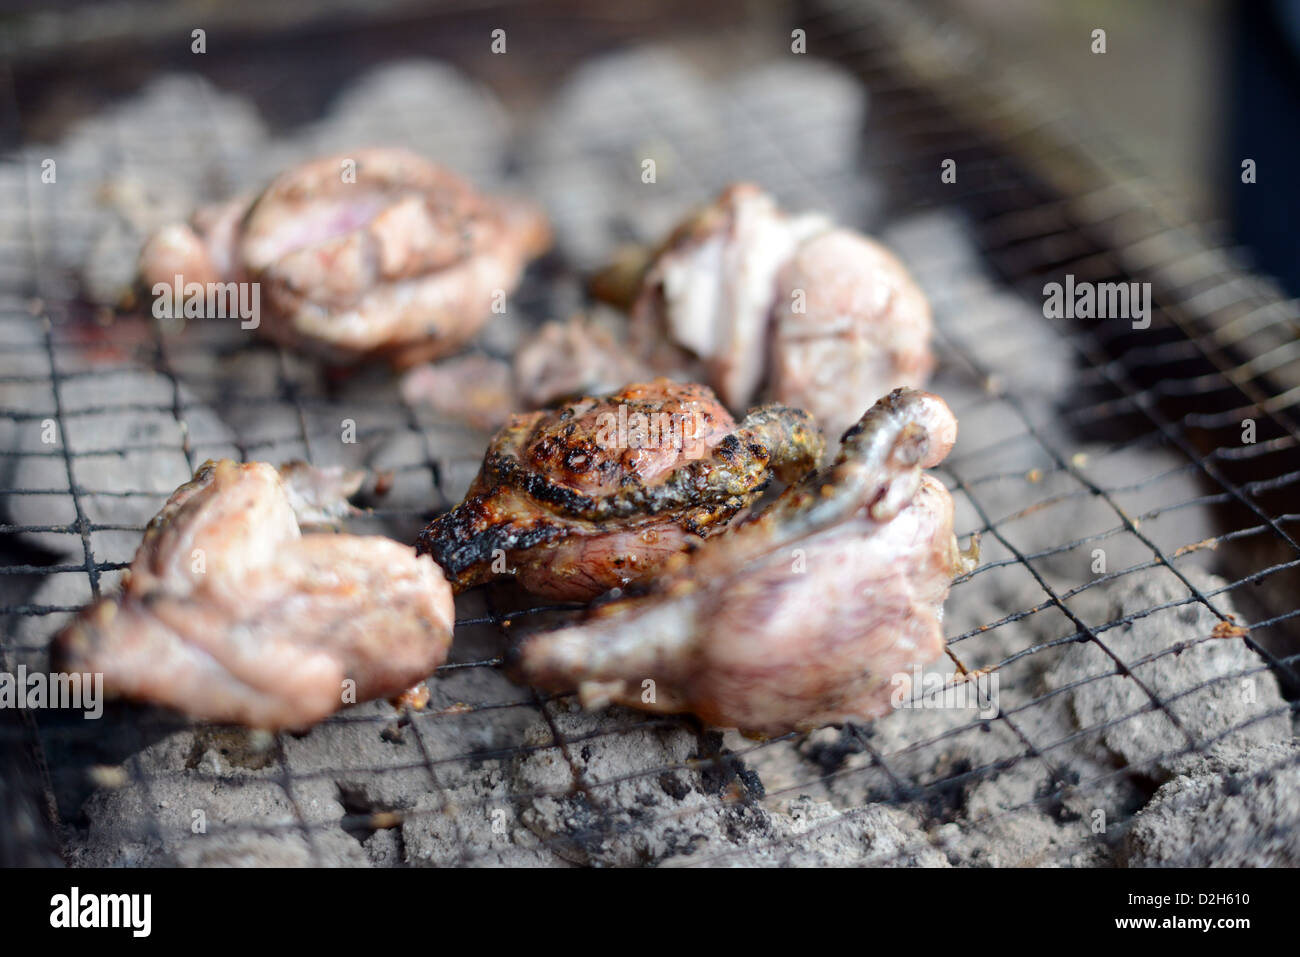 Lamm-Hoden Kochen auf dem Grill Stockfotografie - Alamy